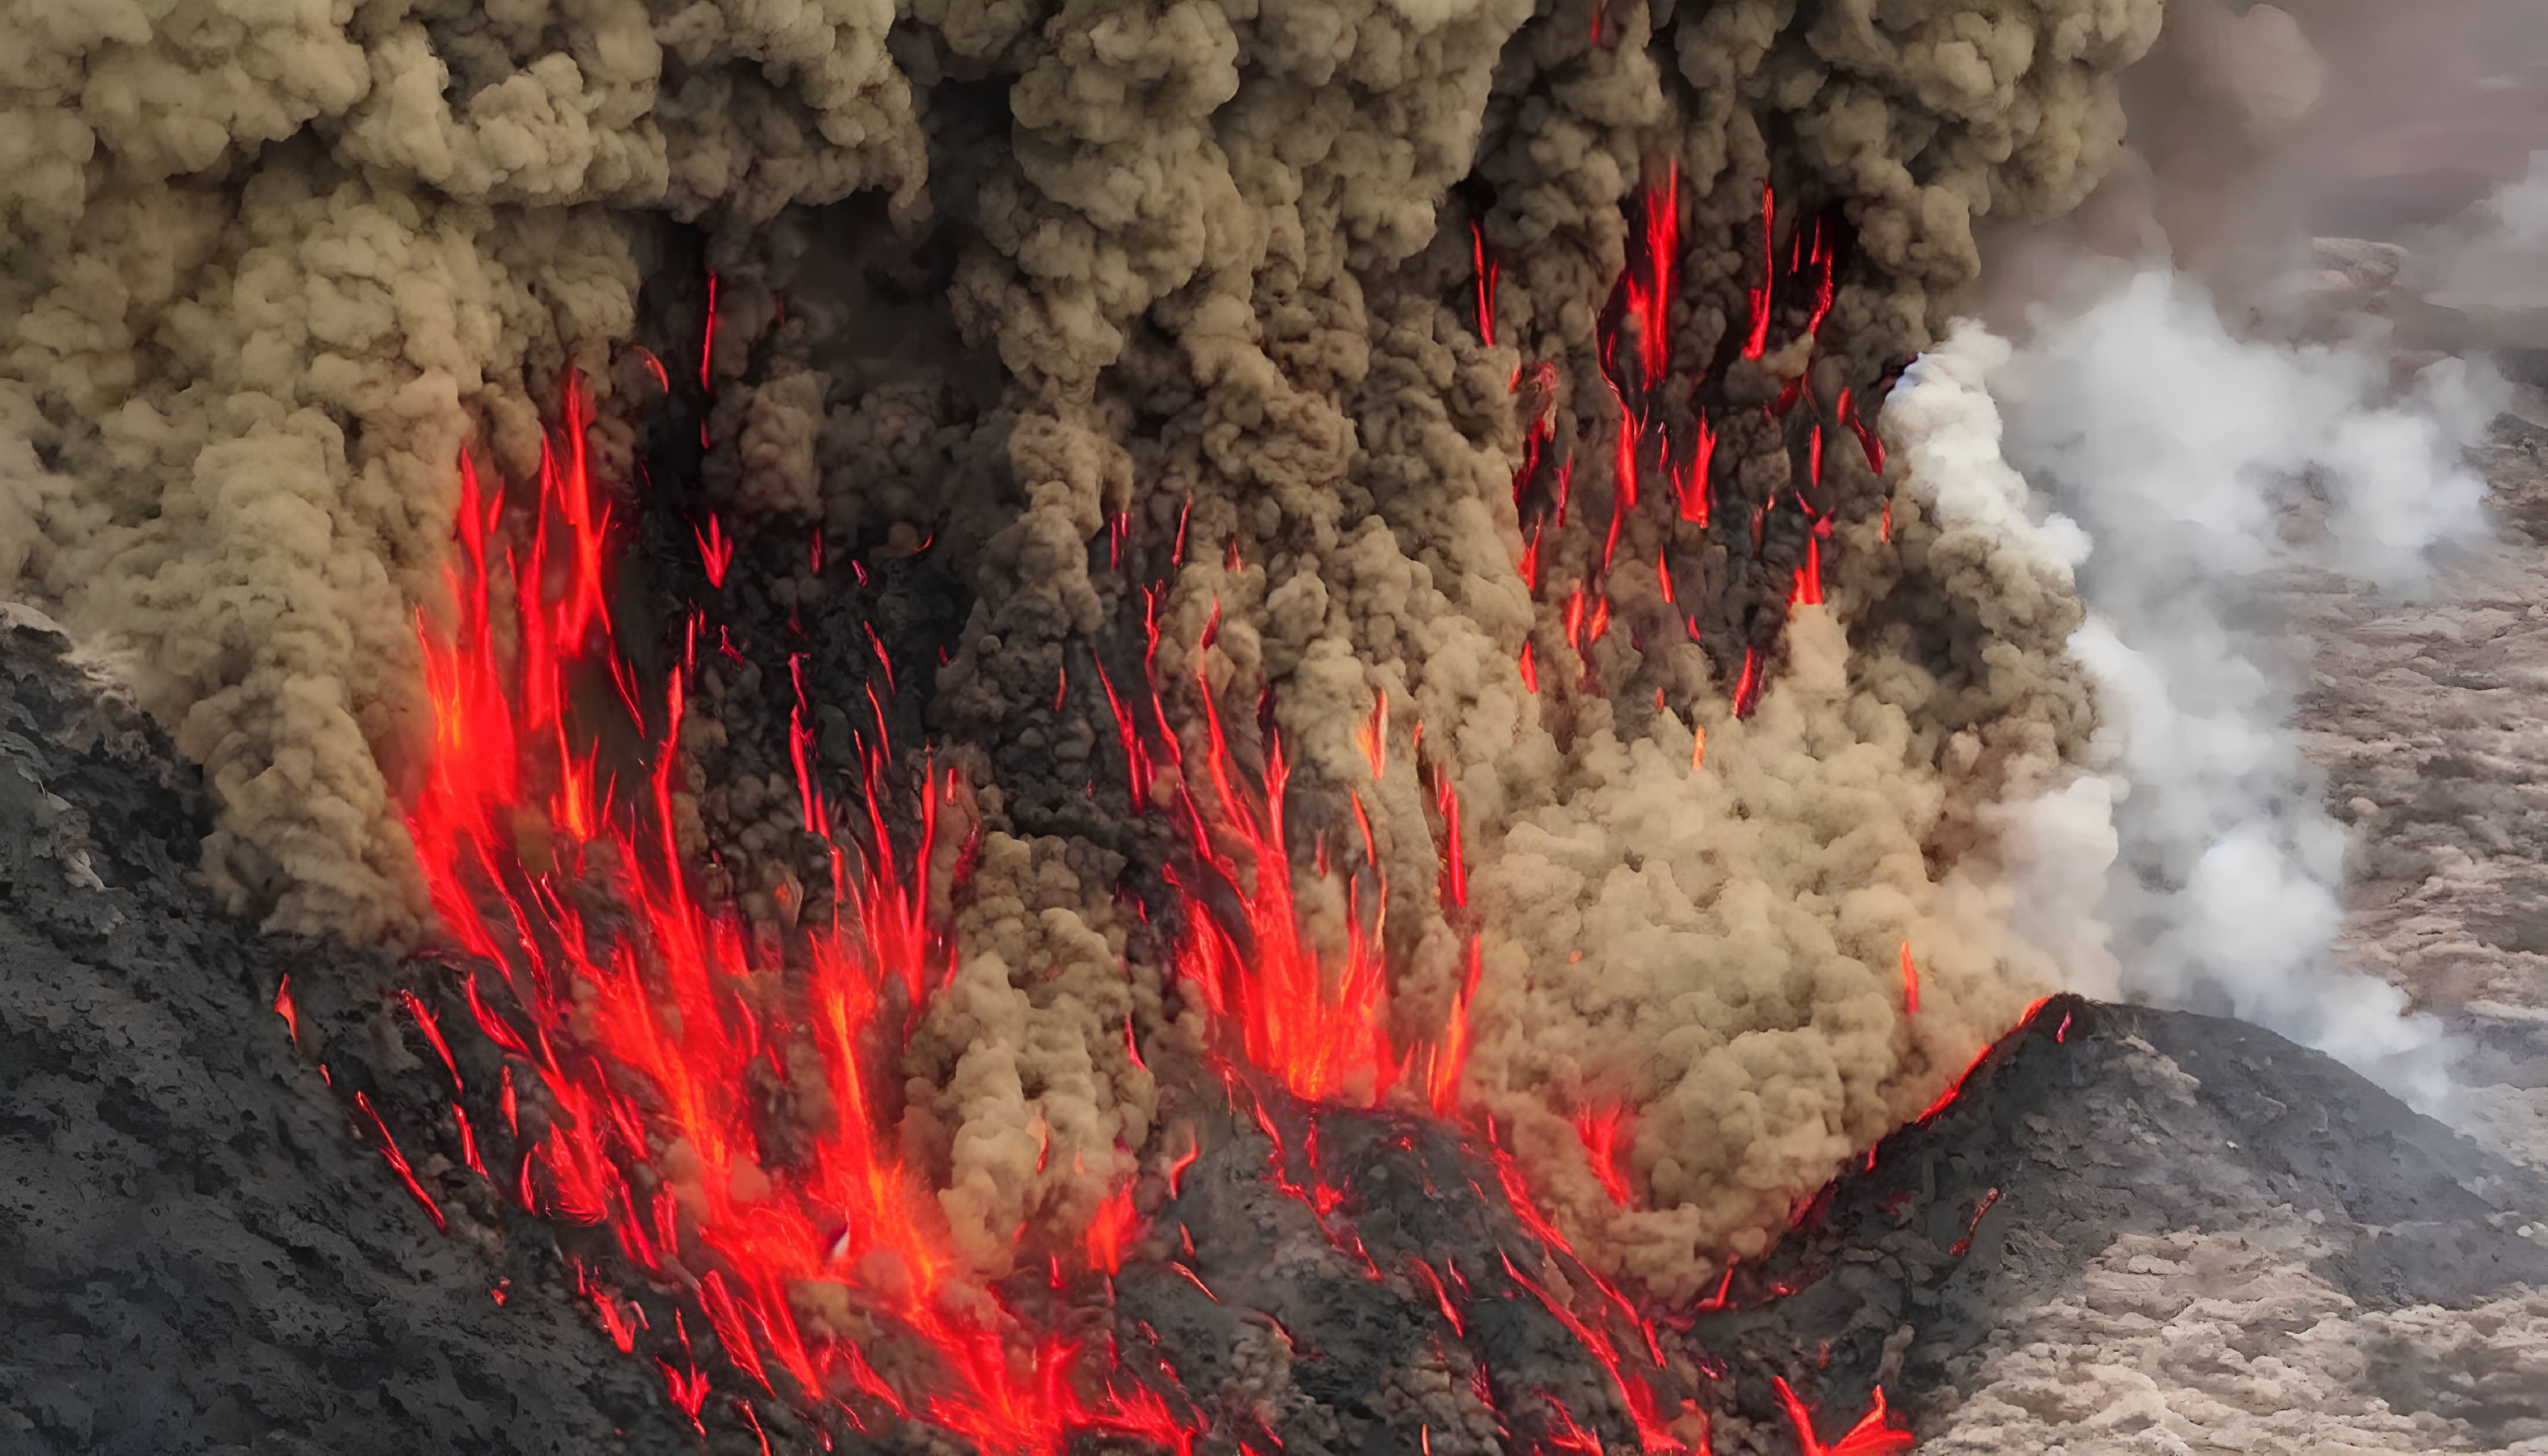 Destructive volcanic eruption with lava and ash clouds